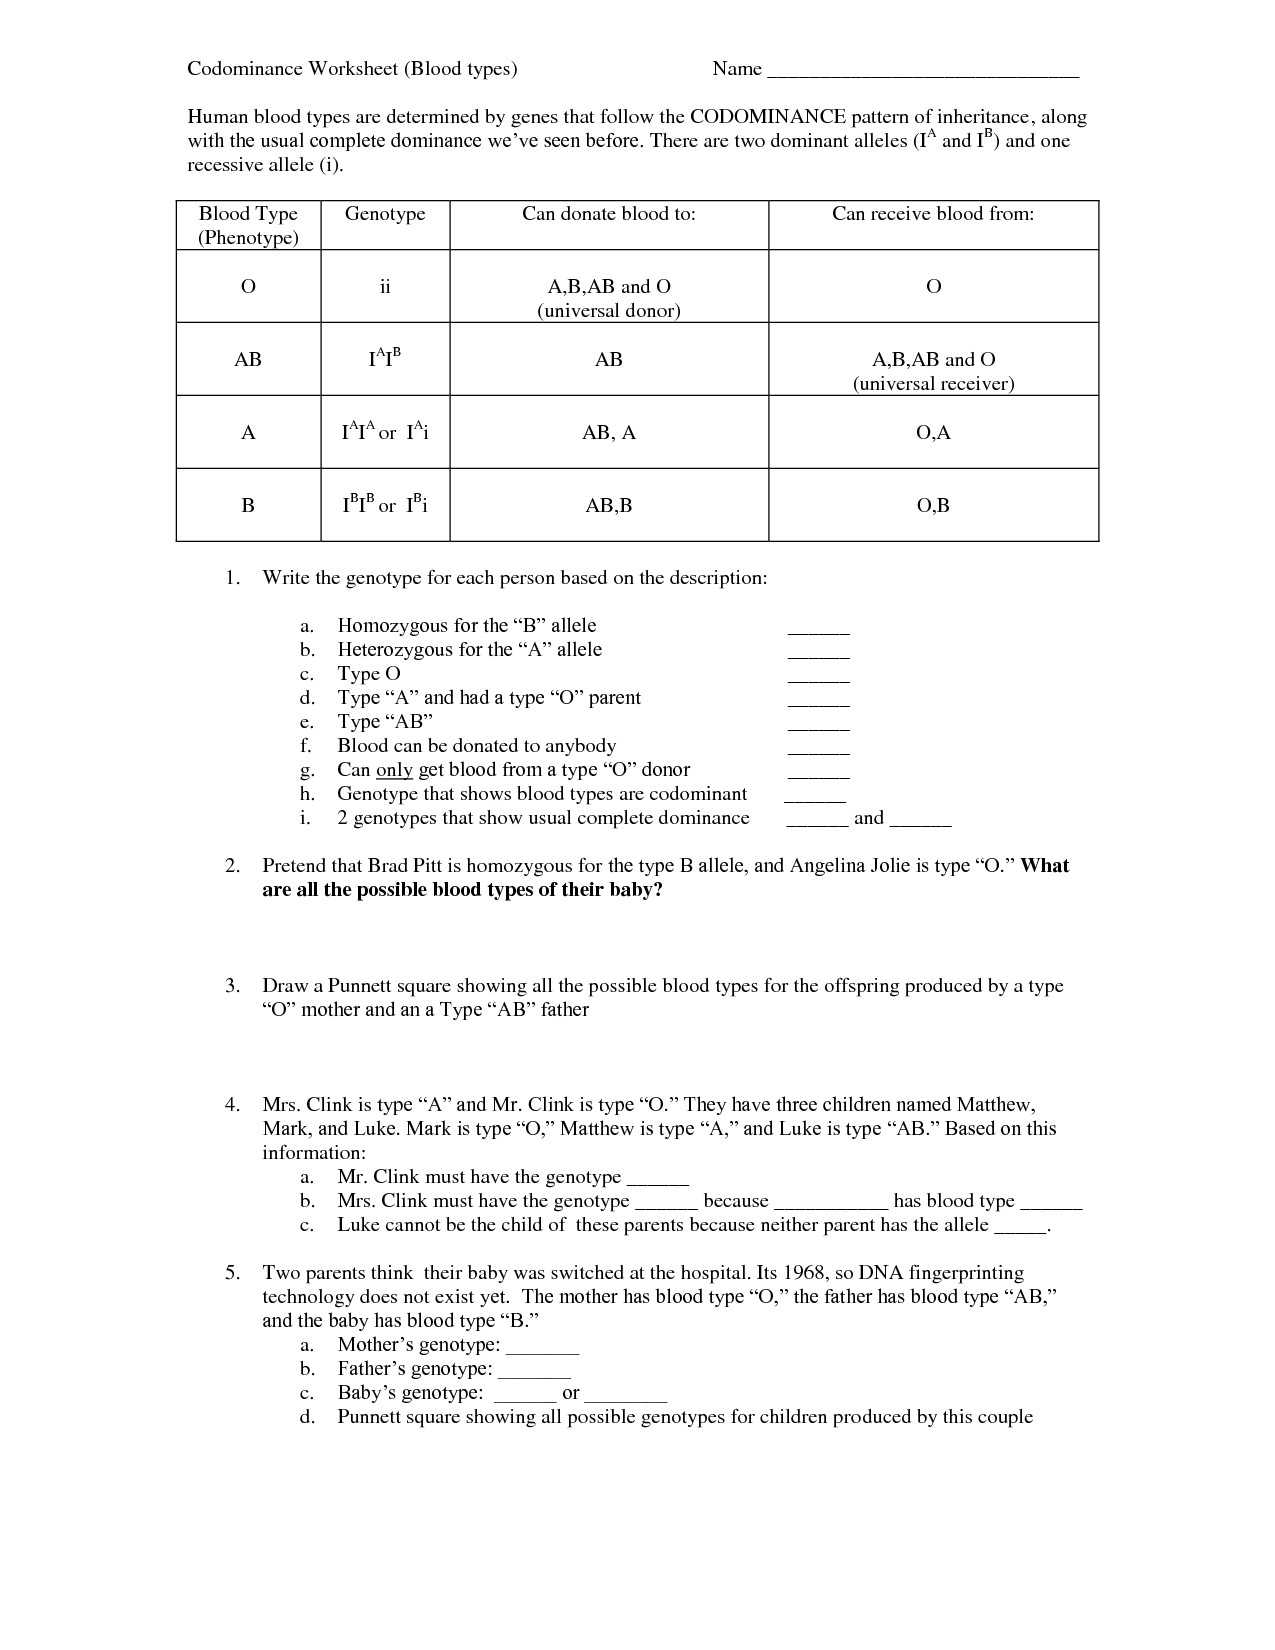 Dna Fingerprinting Worksheet Answer Key Along with Blood Type Paternity Worksheet Worksheet for Kids In English